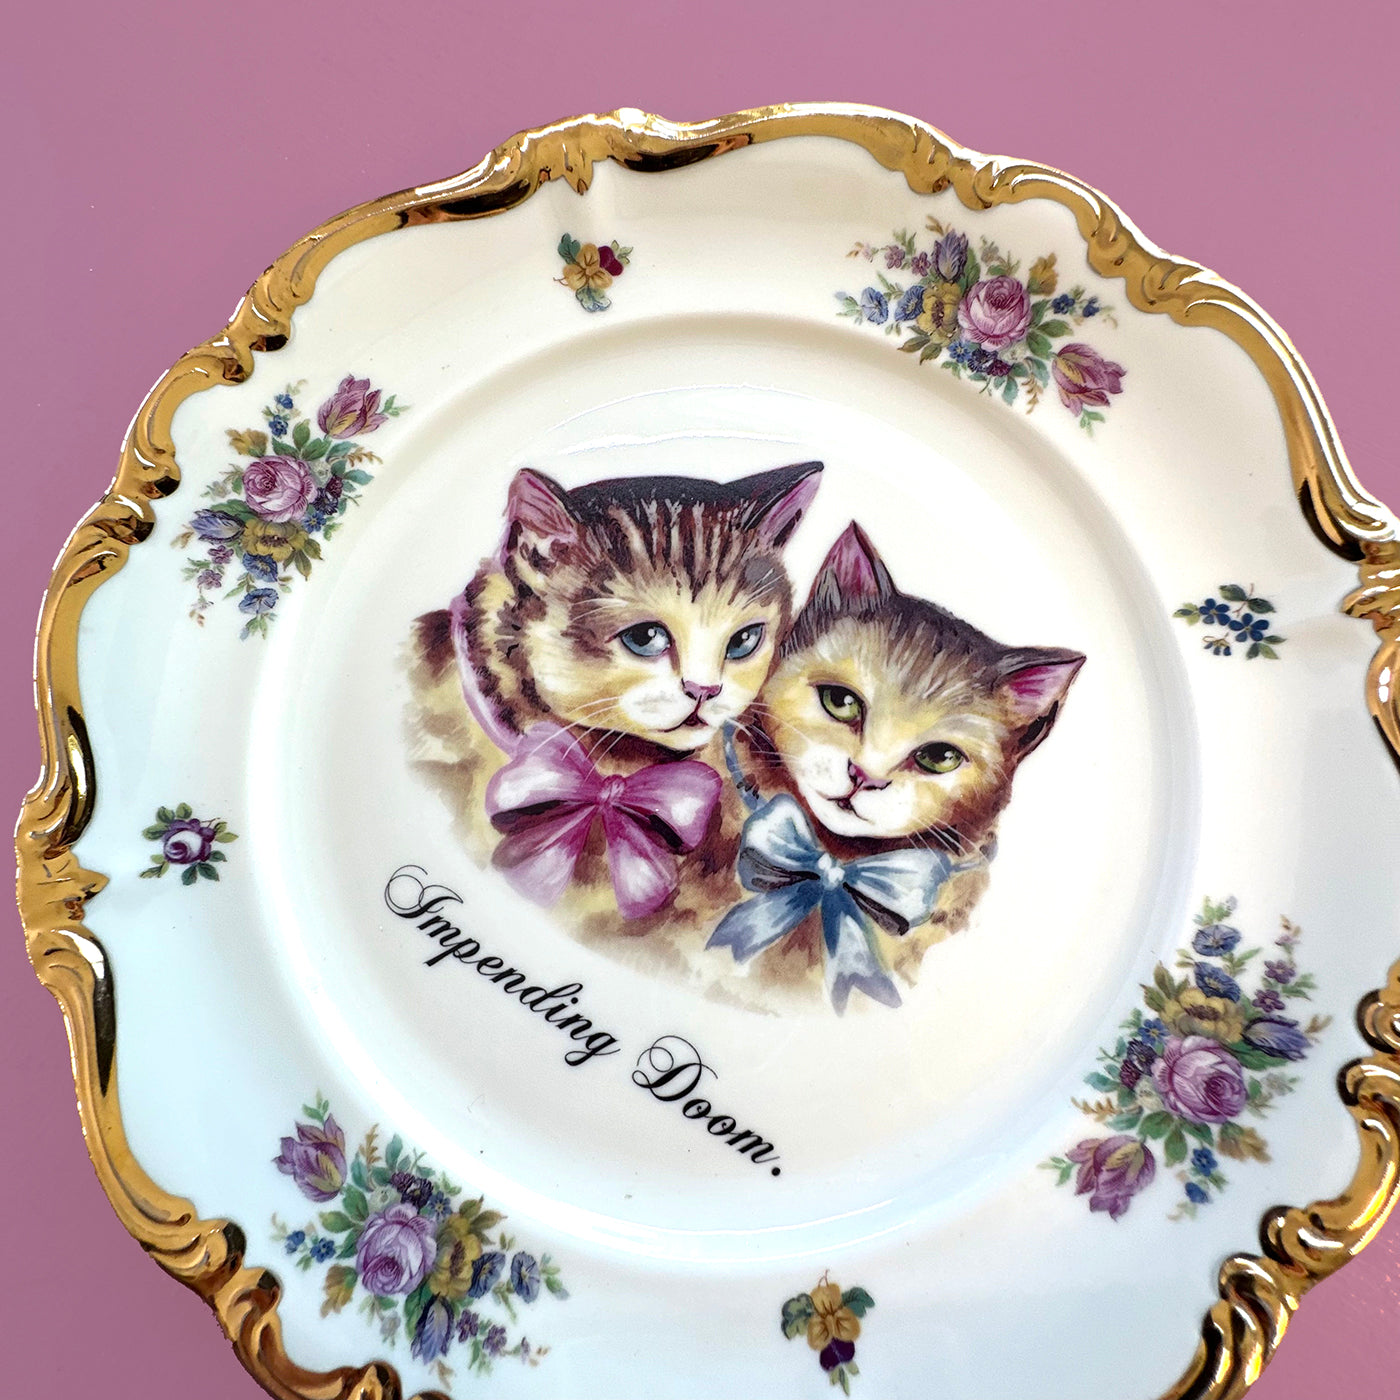 Antique Art Plate - Cat plate - "Impending Doom."